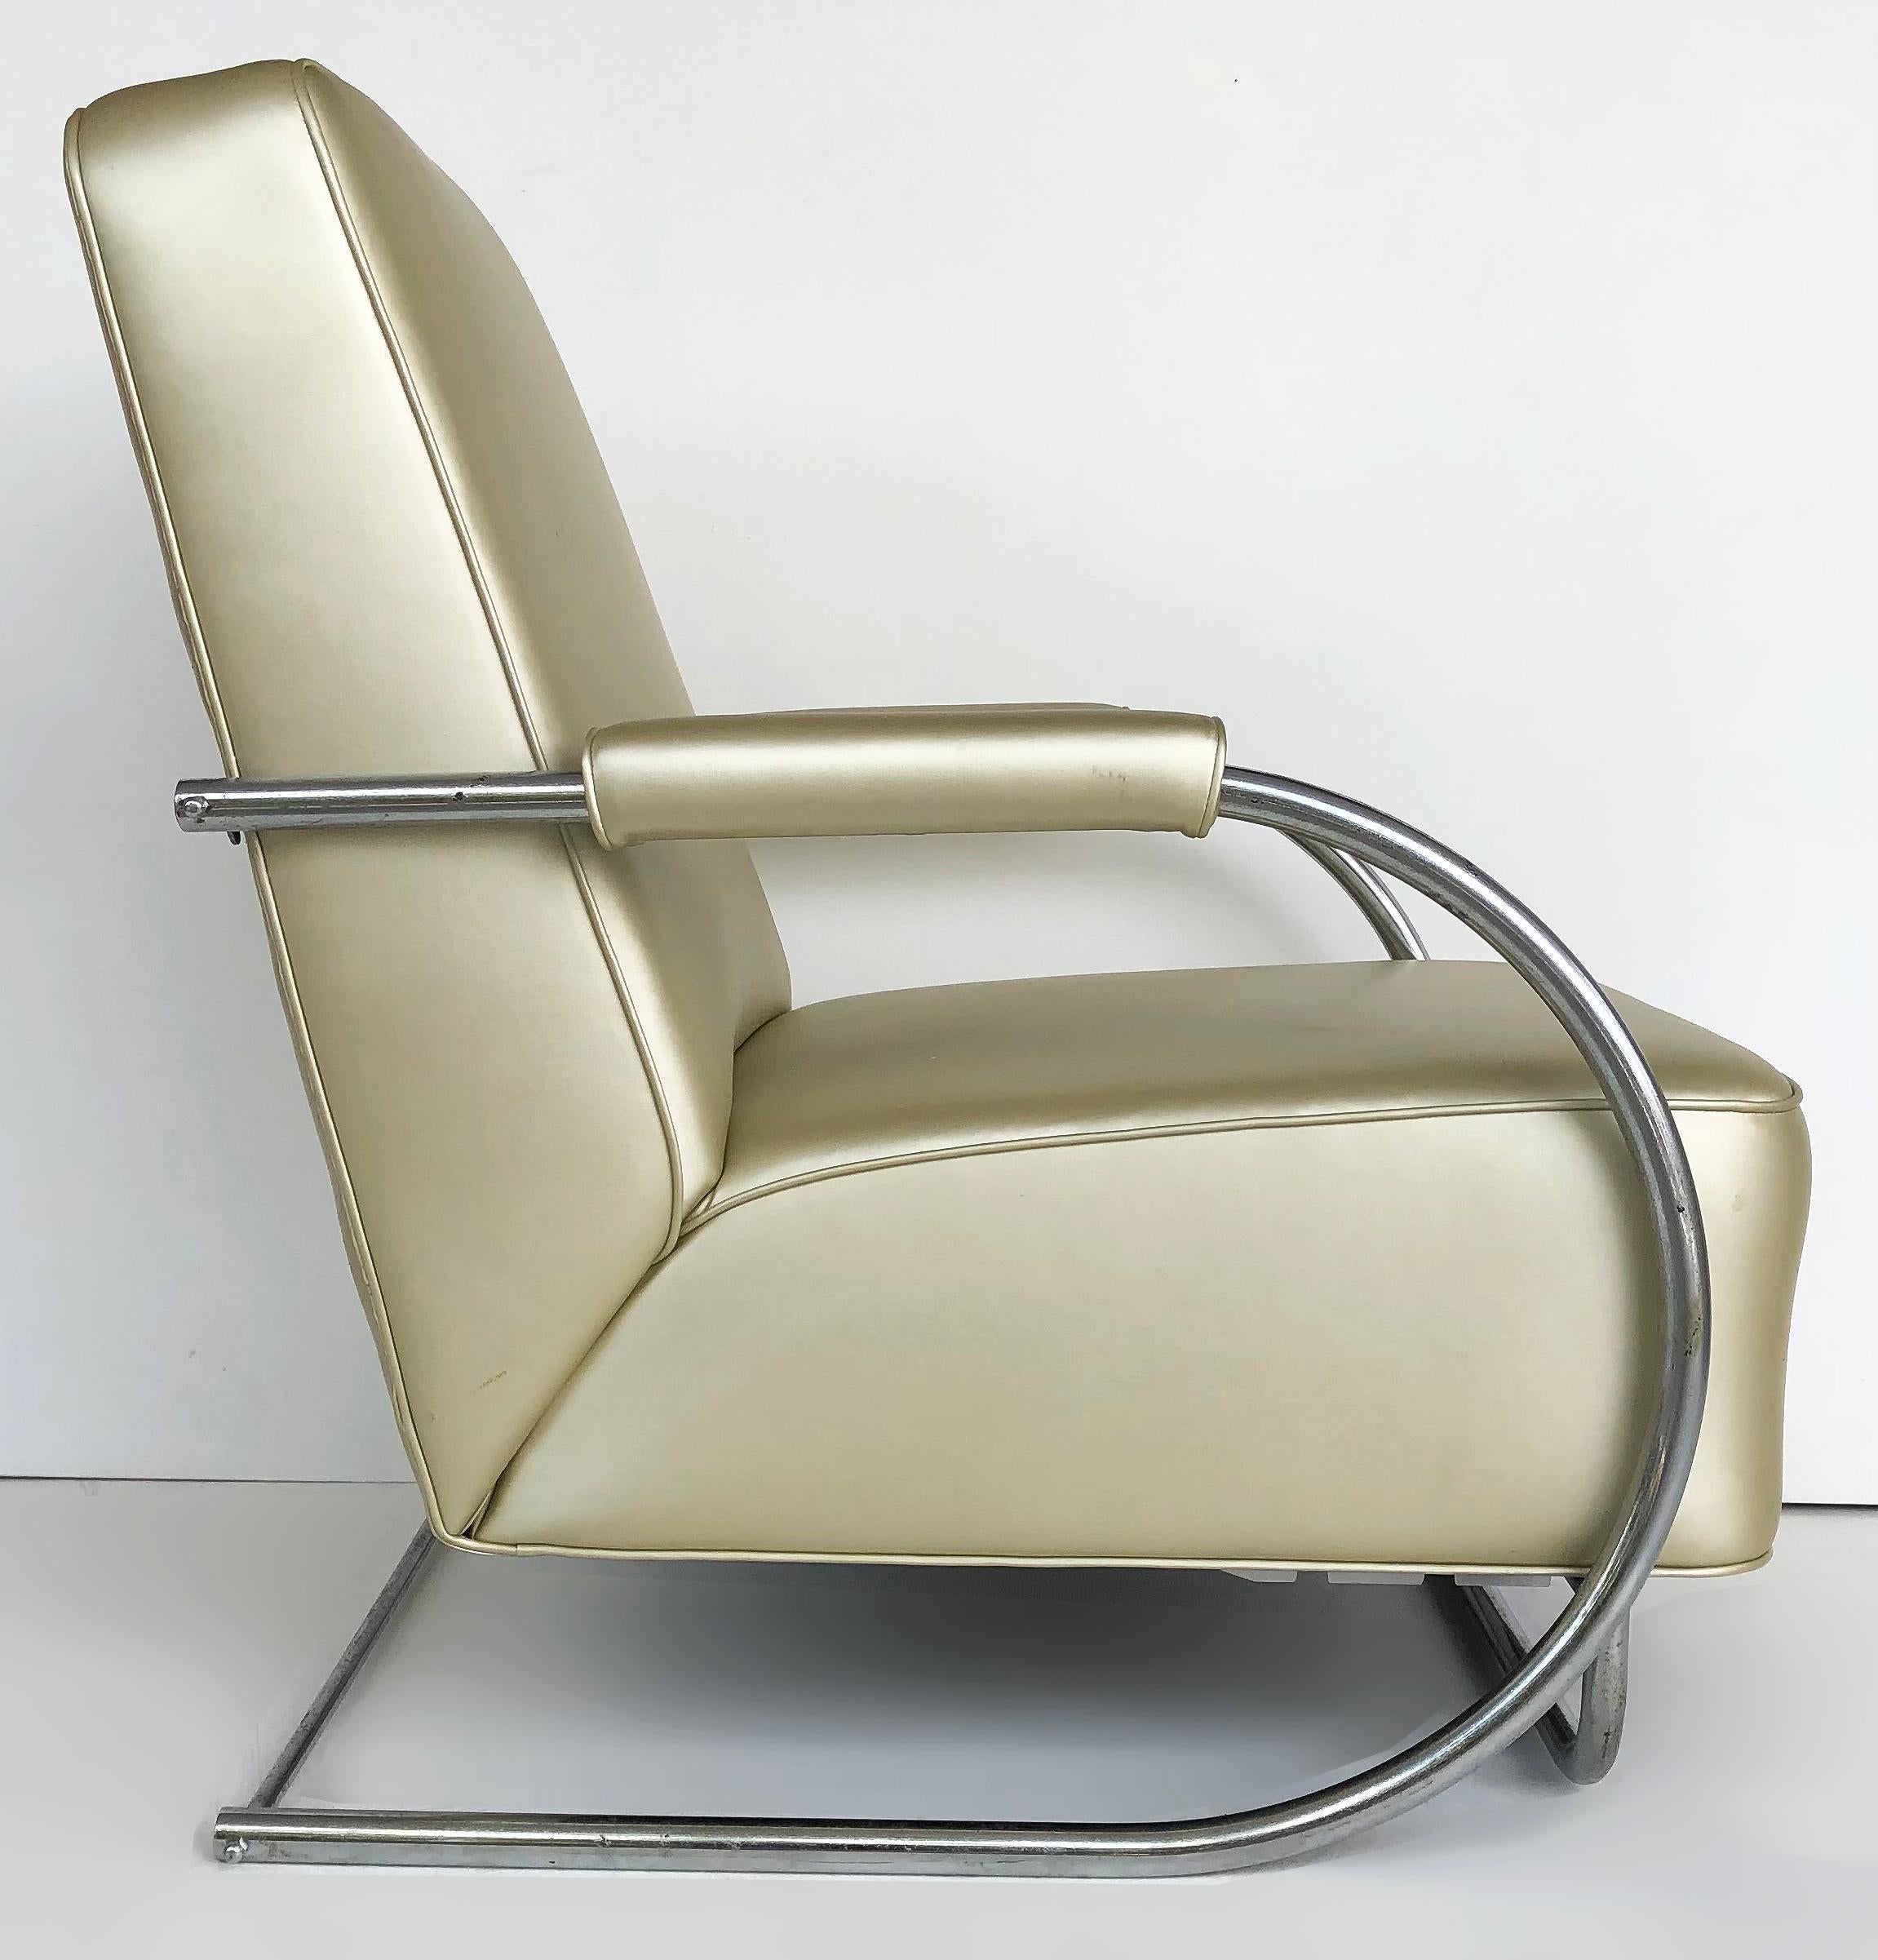 Streamlined Moderne Art Deco Streamline Moderne Chairs by Kem Weber, Attributed 